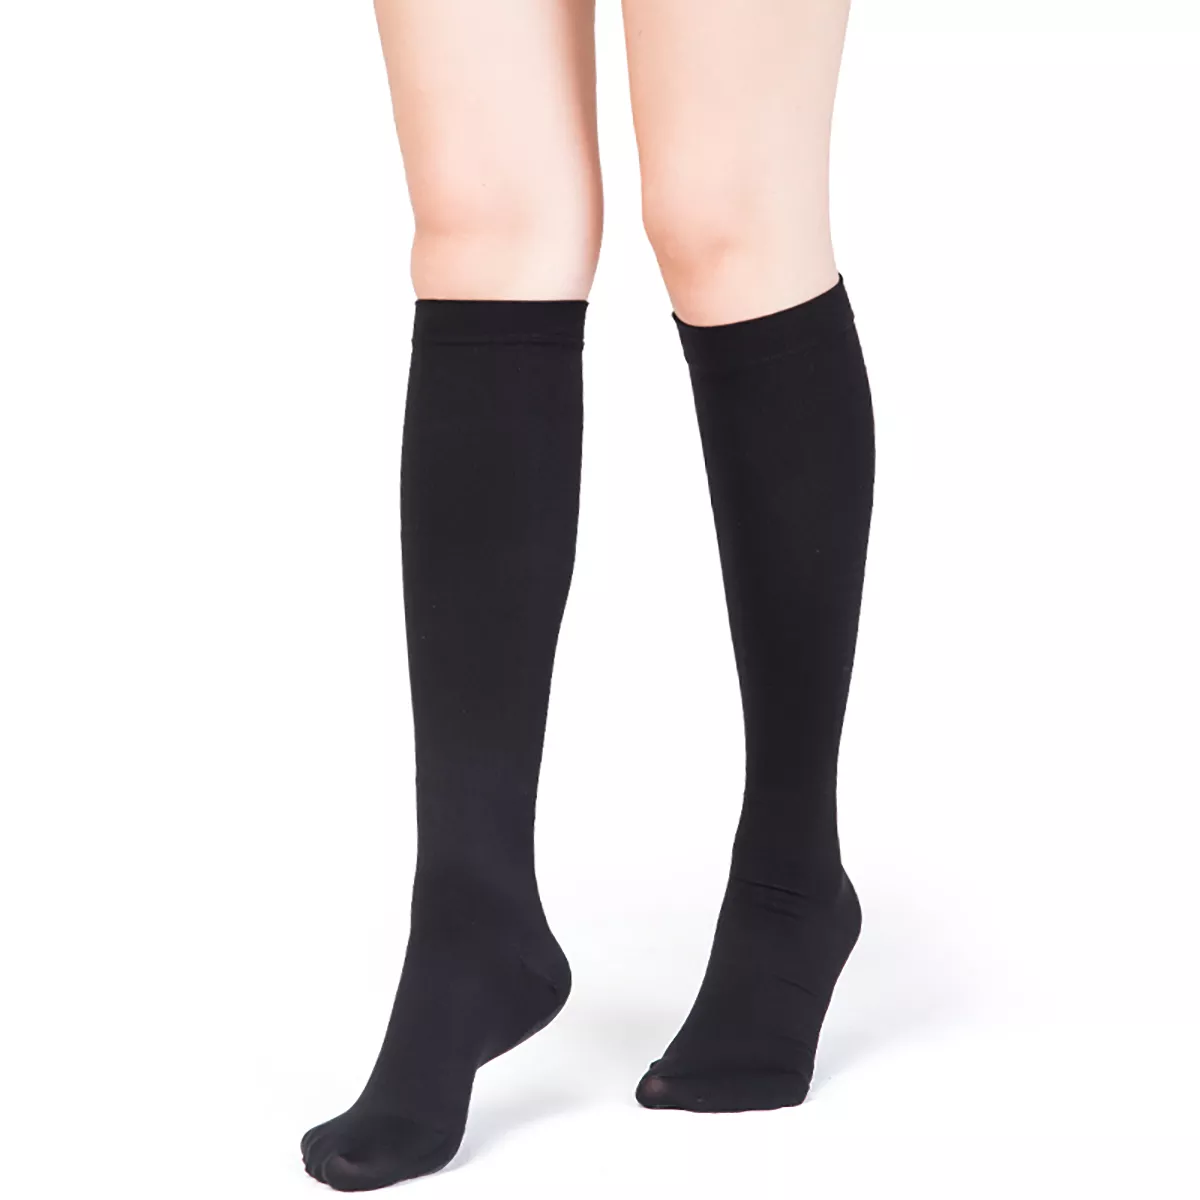 Varcoh ® 40-50 mmHg Women Knee High Closed Toe Compression Socks Black